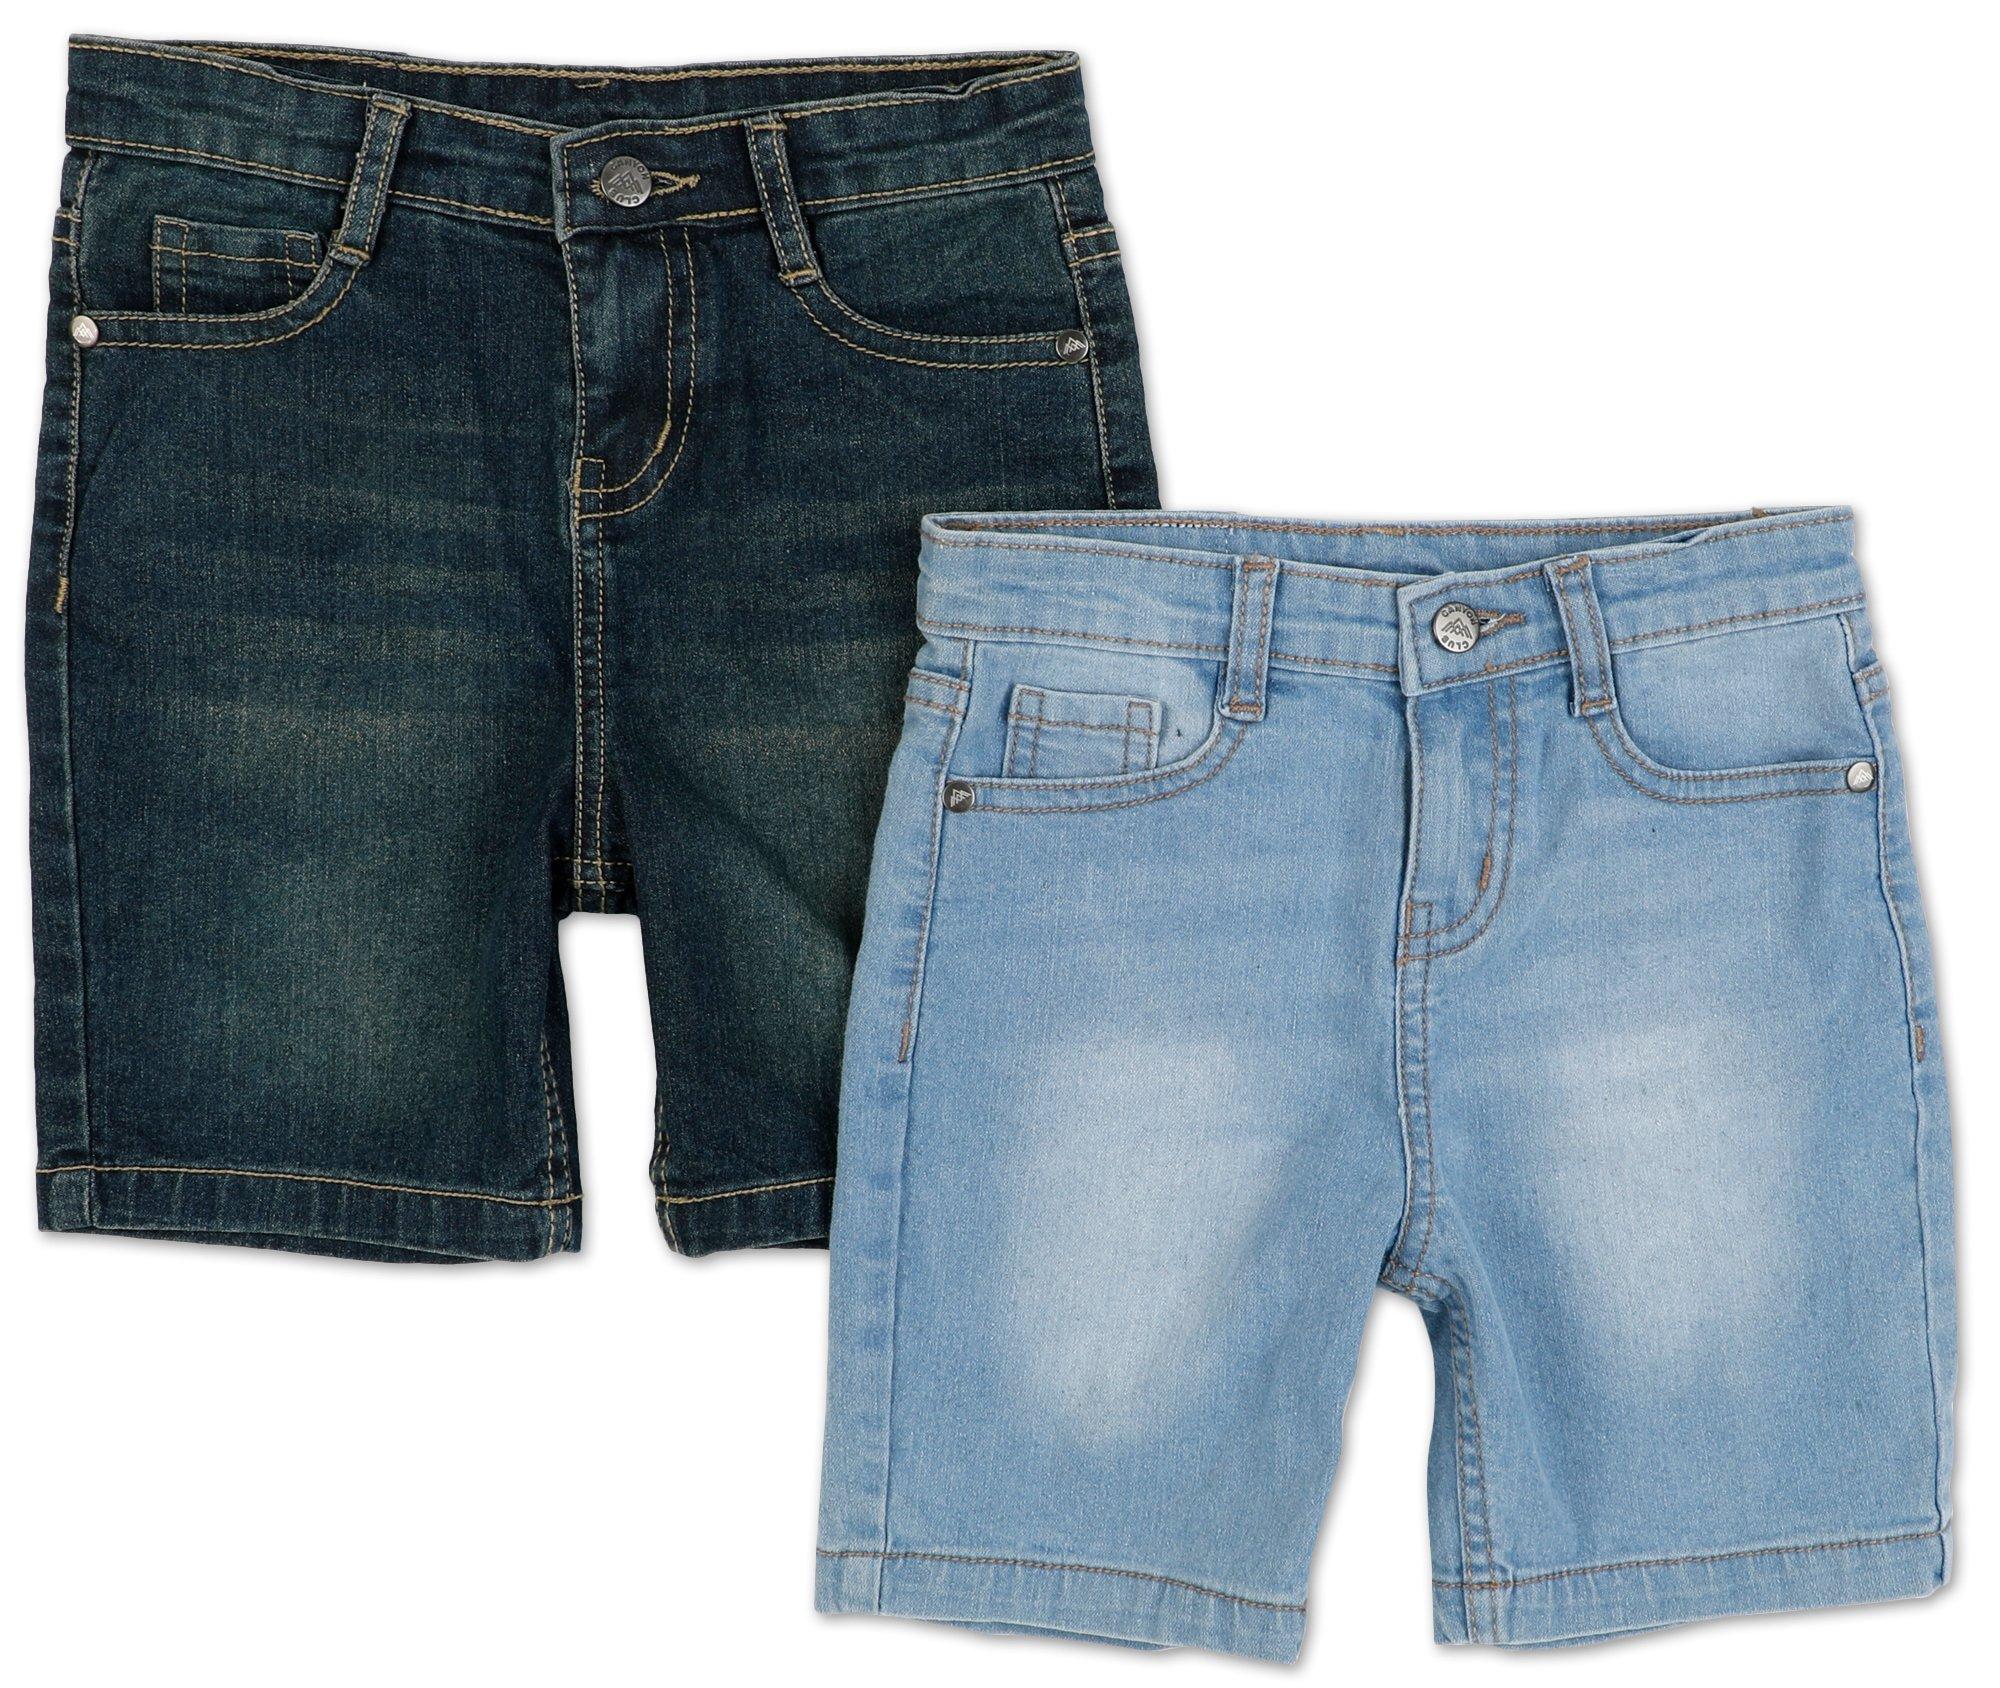 Toddler Boys 2 Pk Denim Shorts